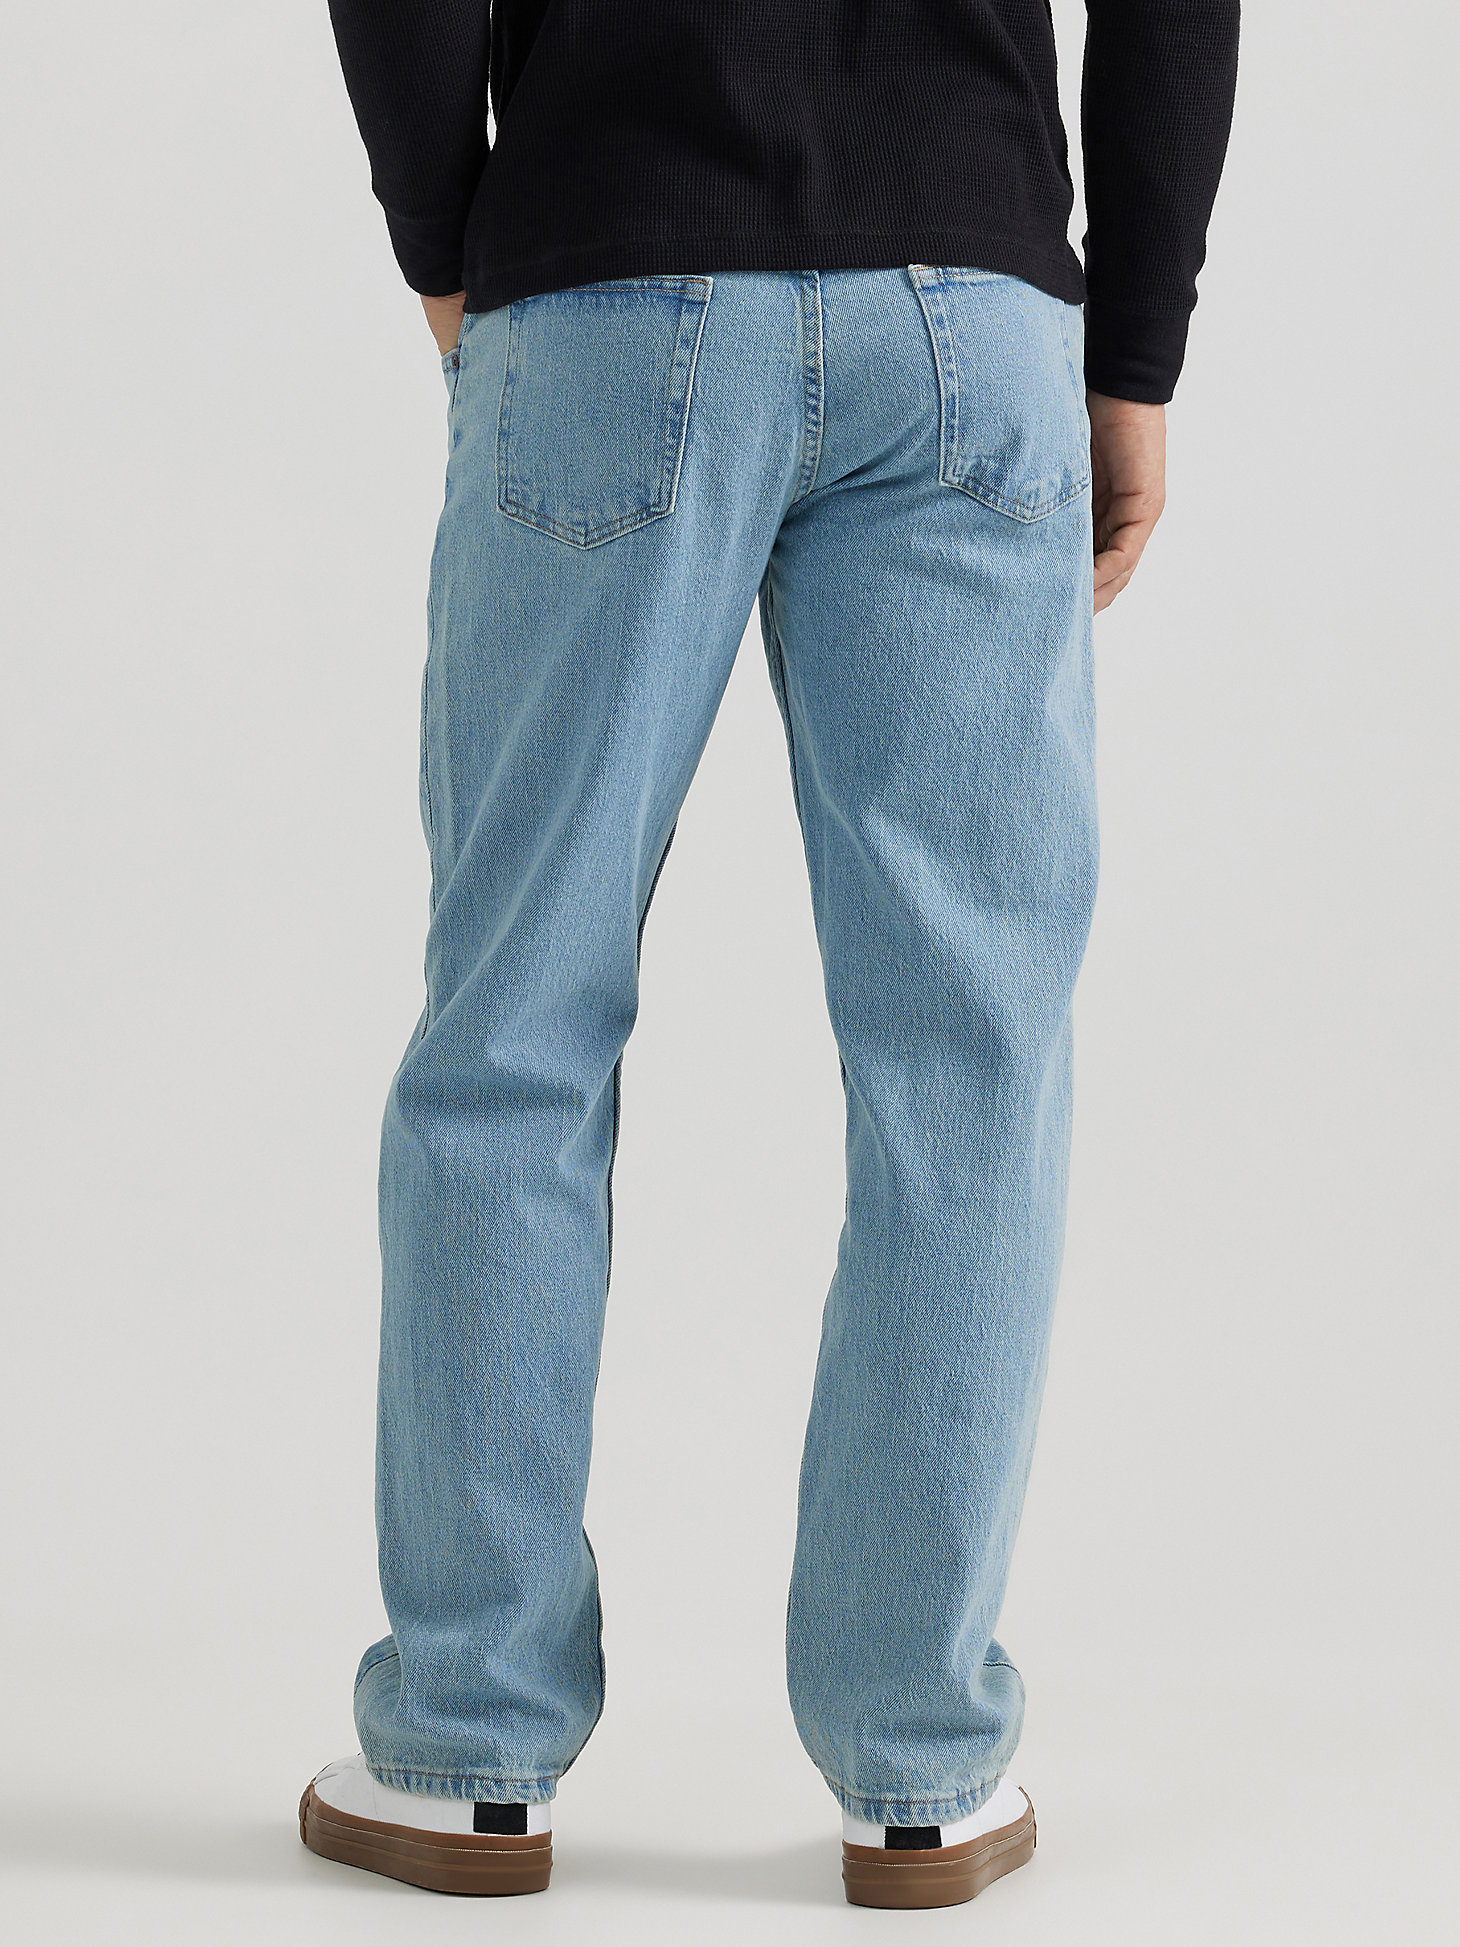 Wrangler® Five Star Premium Denim Flex for Comfort Relaxed Fit Jean in Vintage Blue alternative view 1